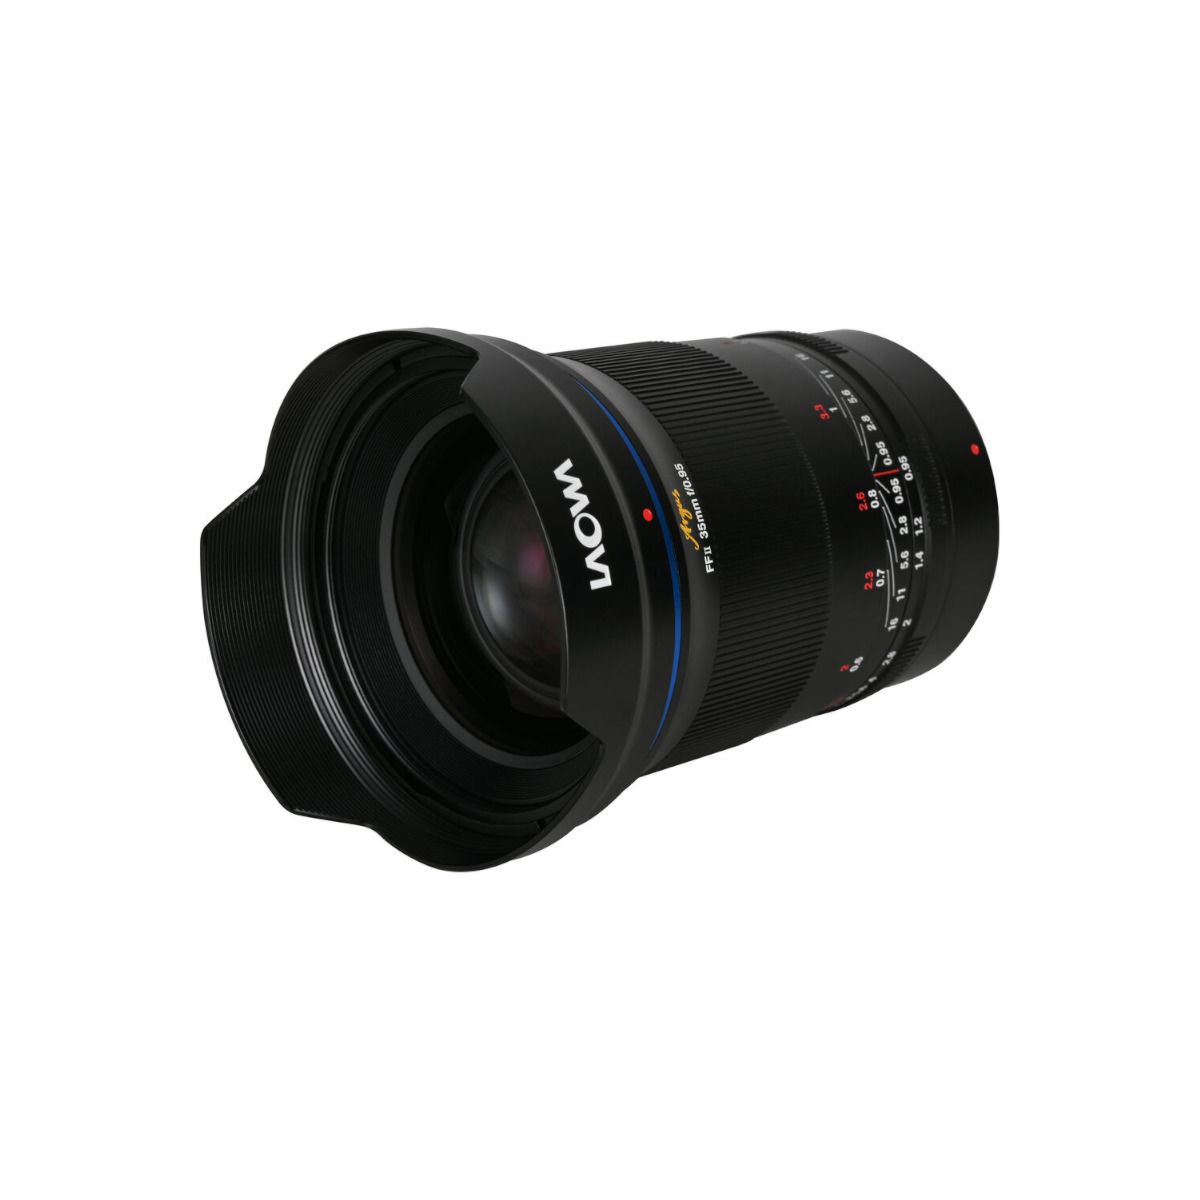 Laowa Argus 35Mm F/0.95 Lens Manual Focus Canon RF